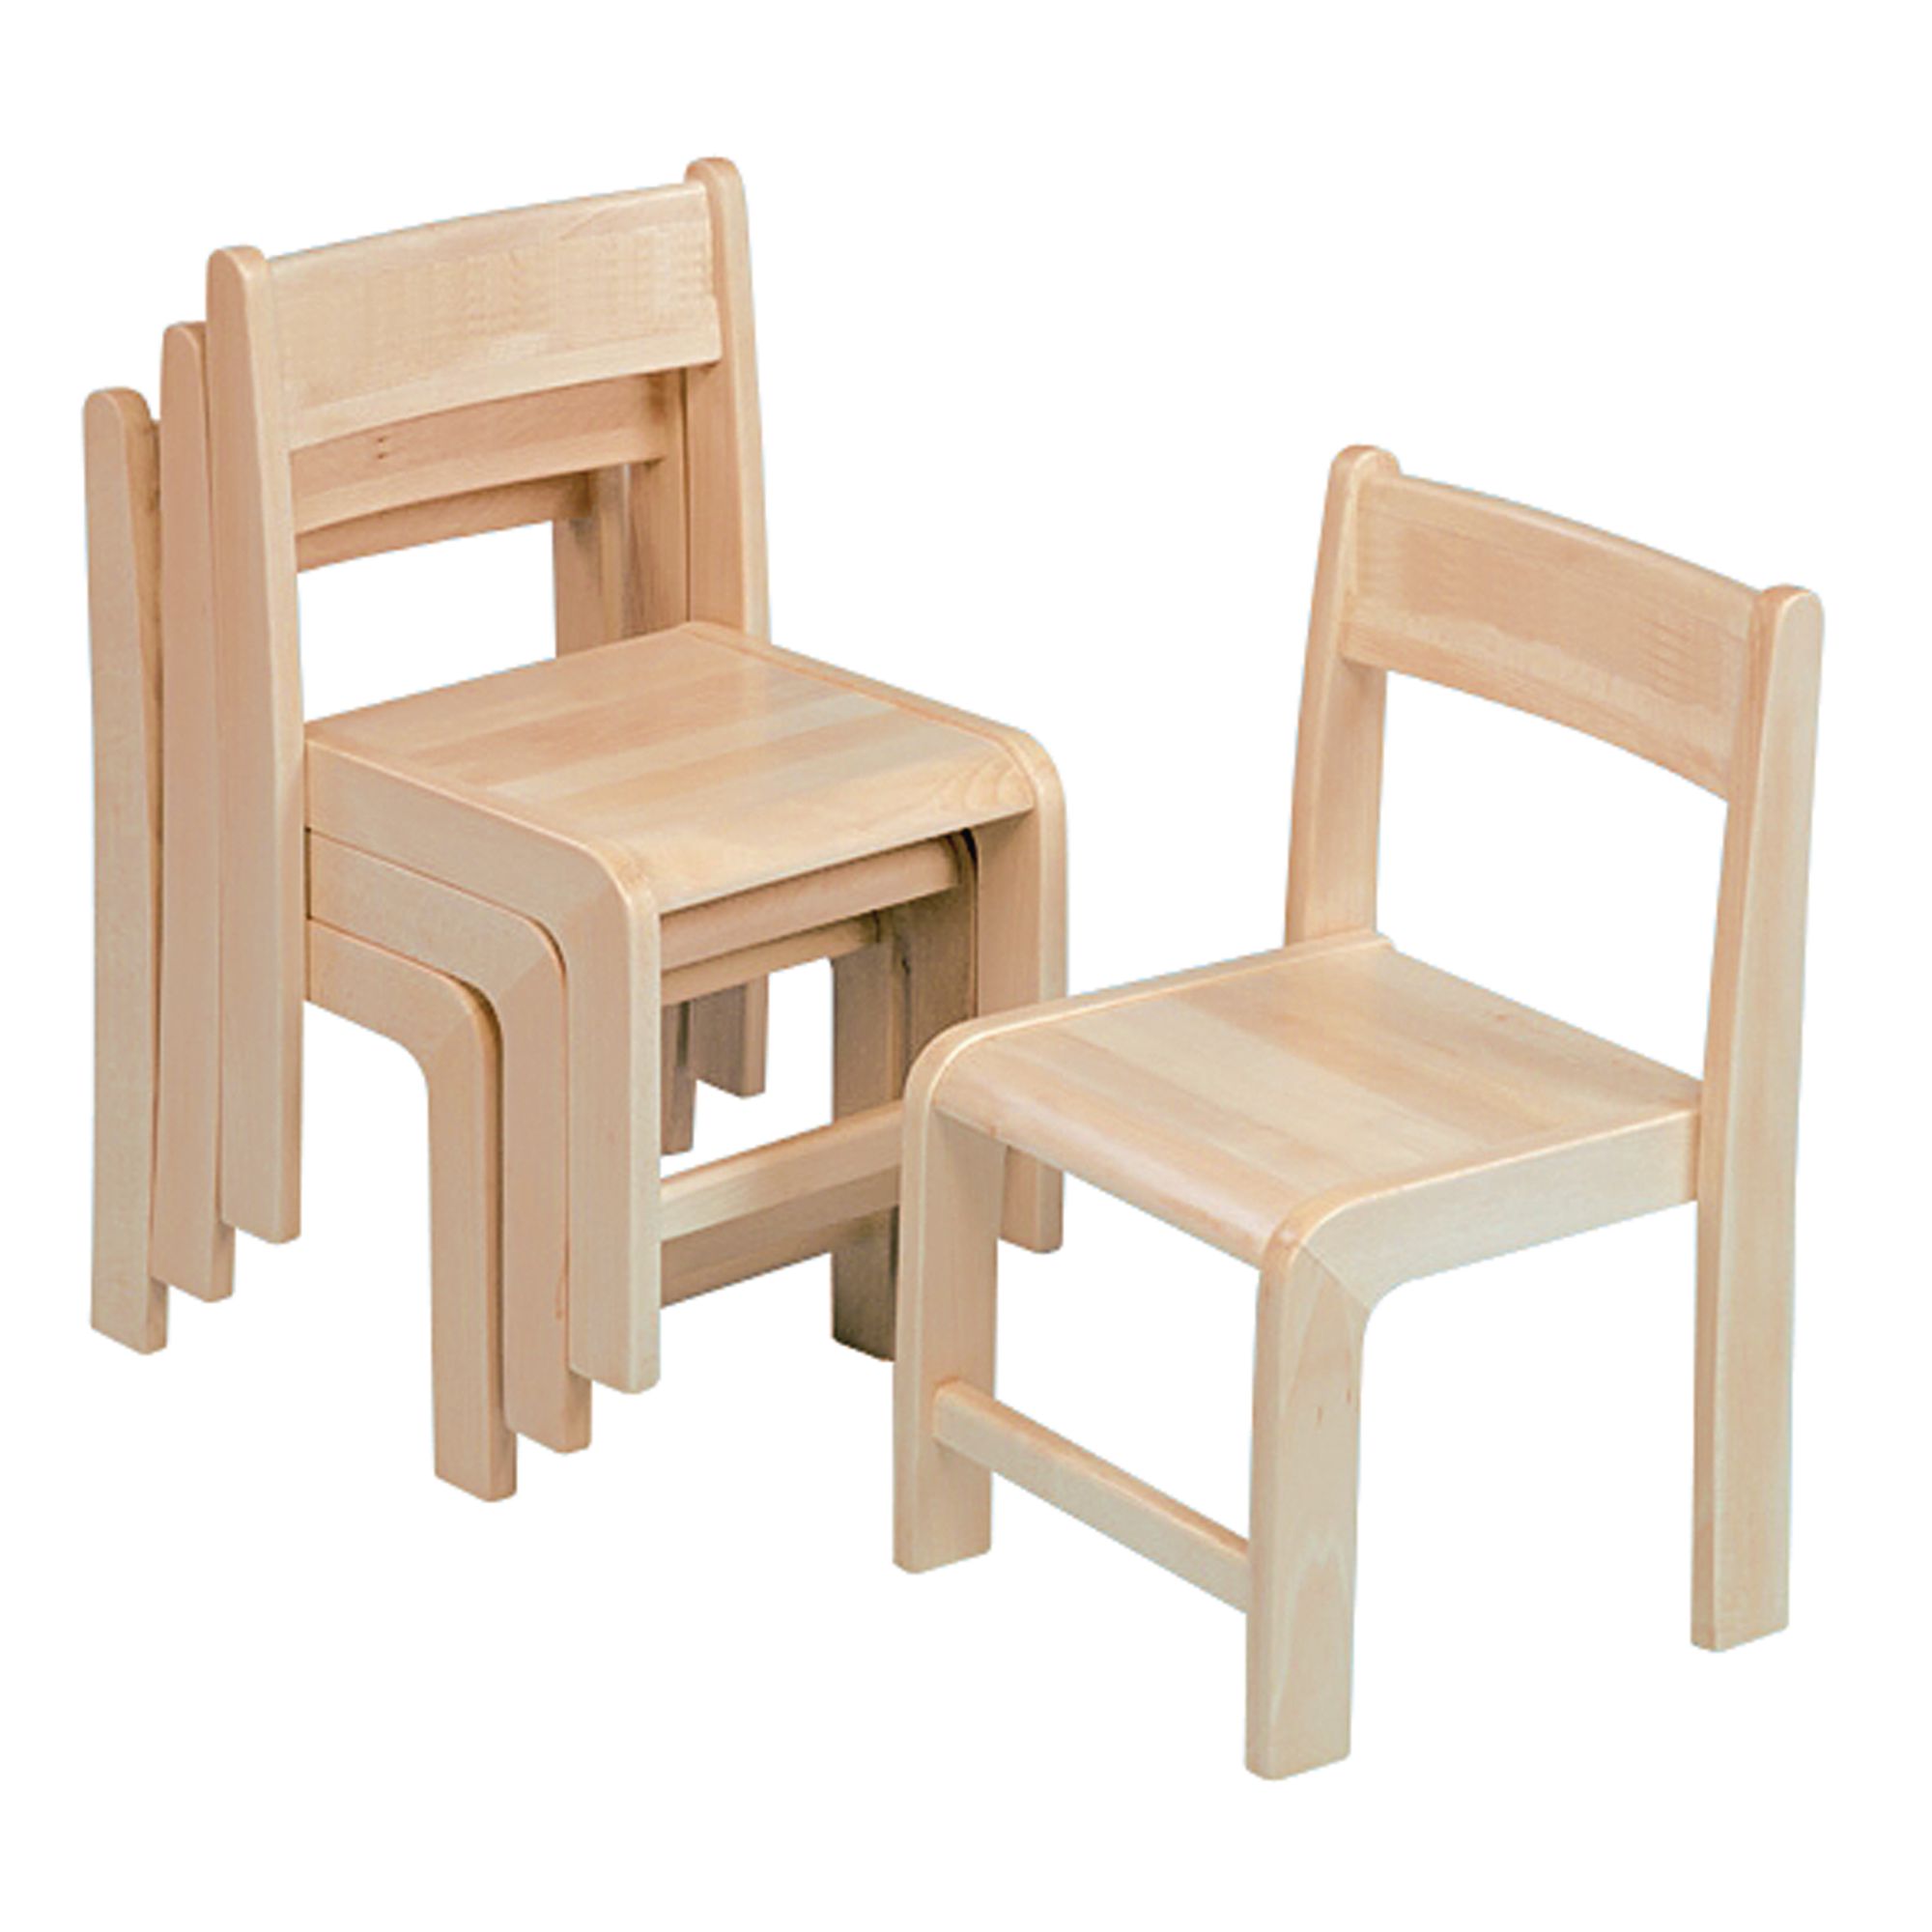 Fe032561 Galt Stackable Wooden Chair Pack Of 4 Findel International